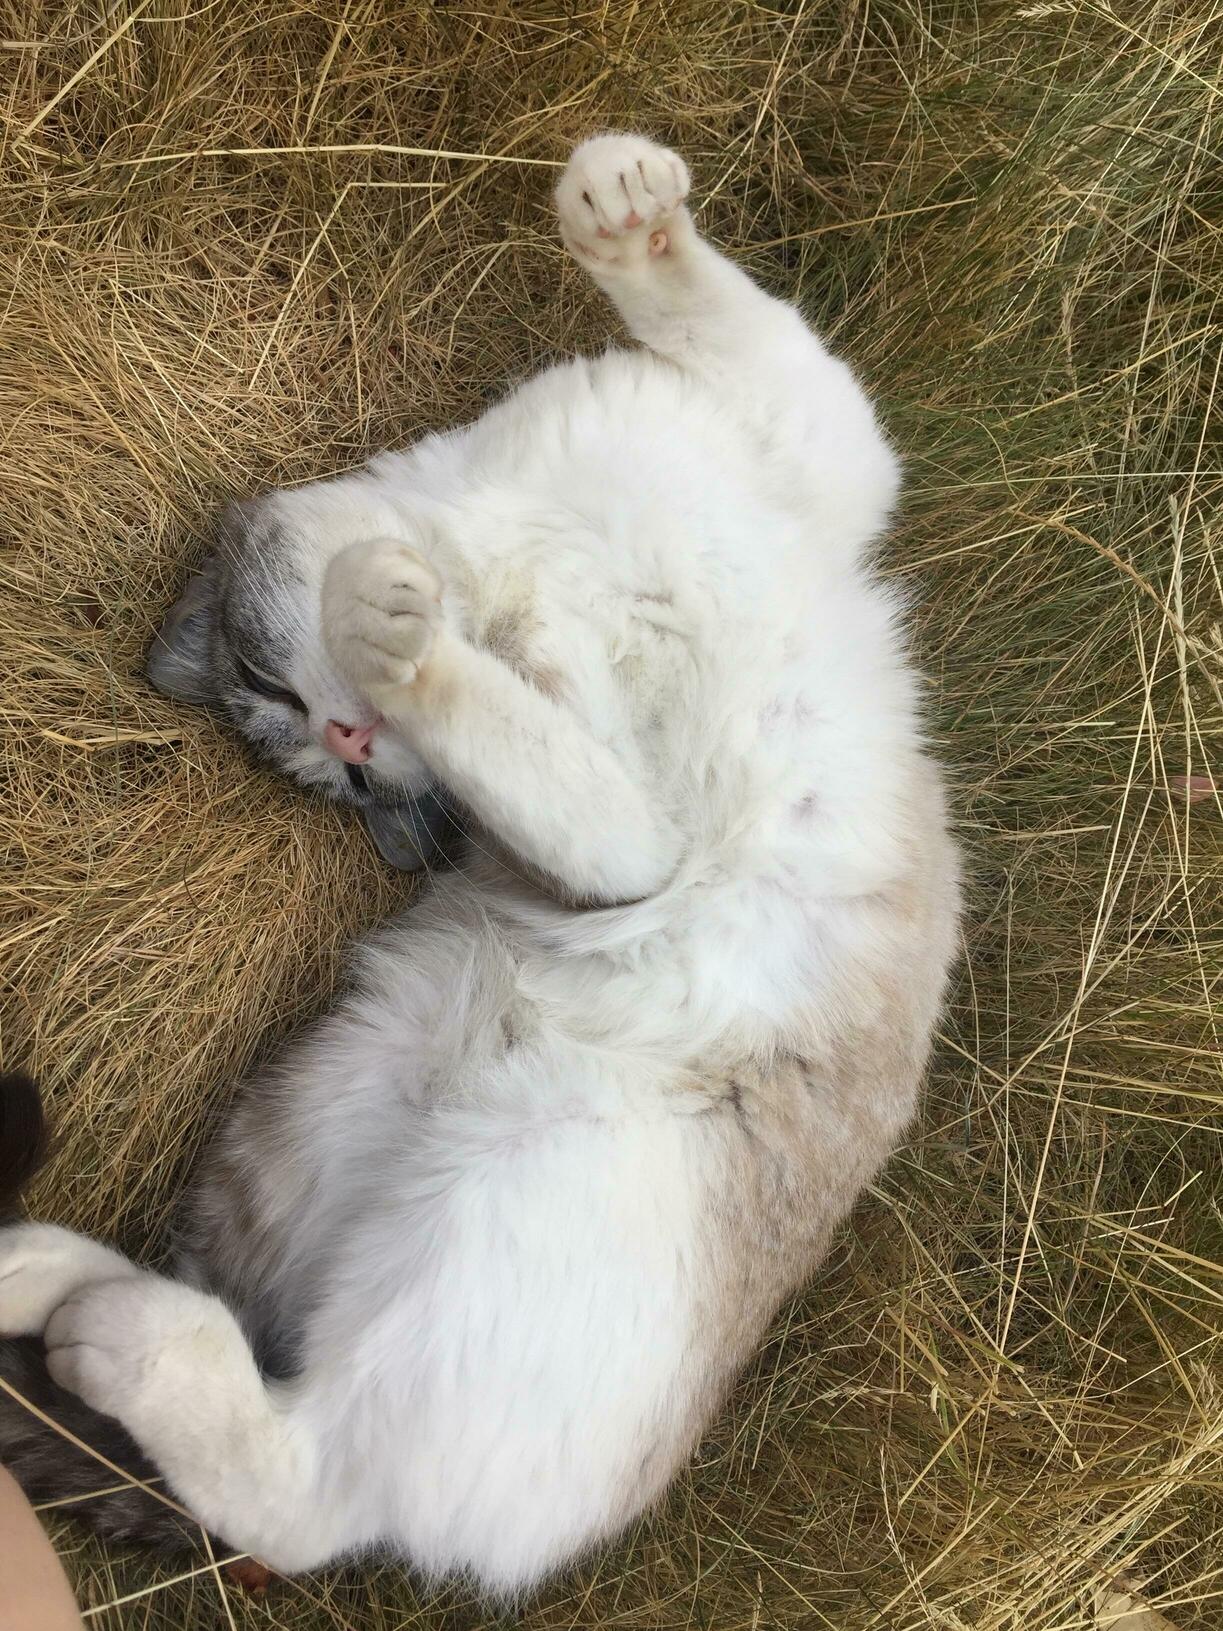 Charlie loves rolling around in grass